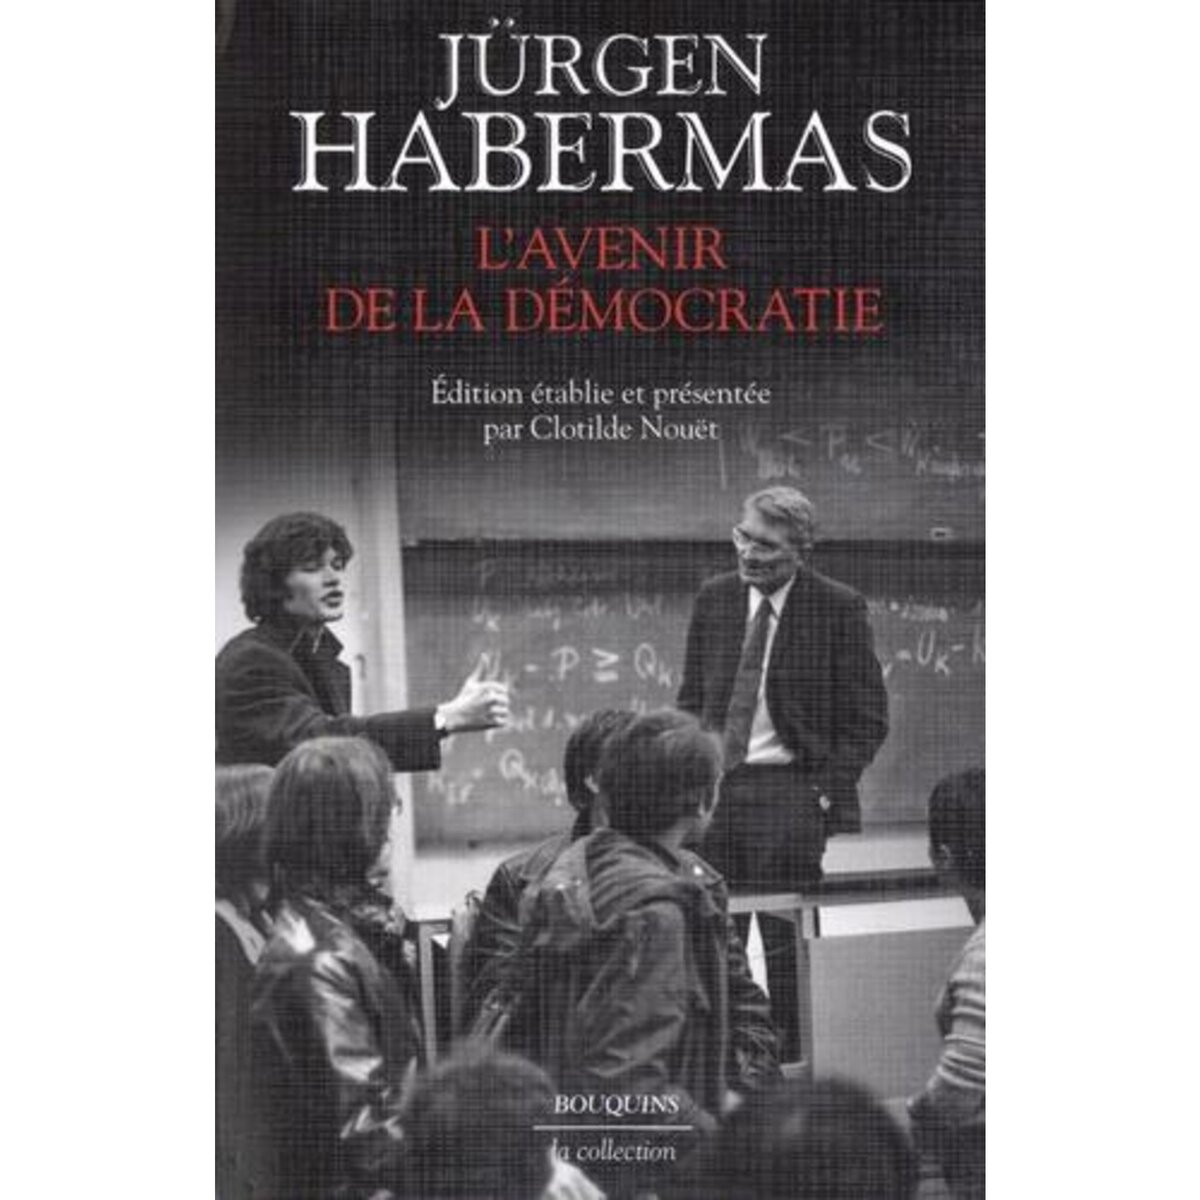  L'AVENIR DE LA DEMOCRATIE, Habermas Jürgen